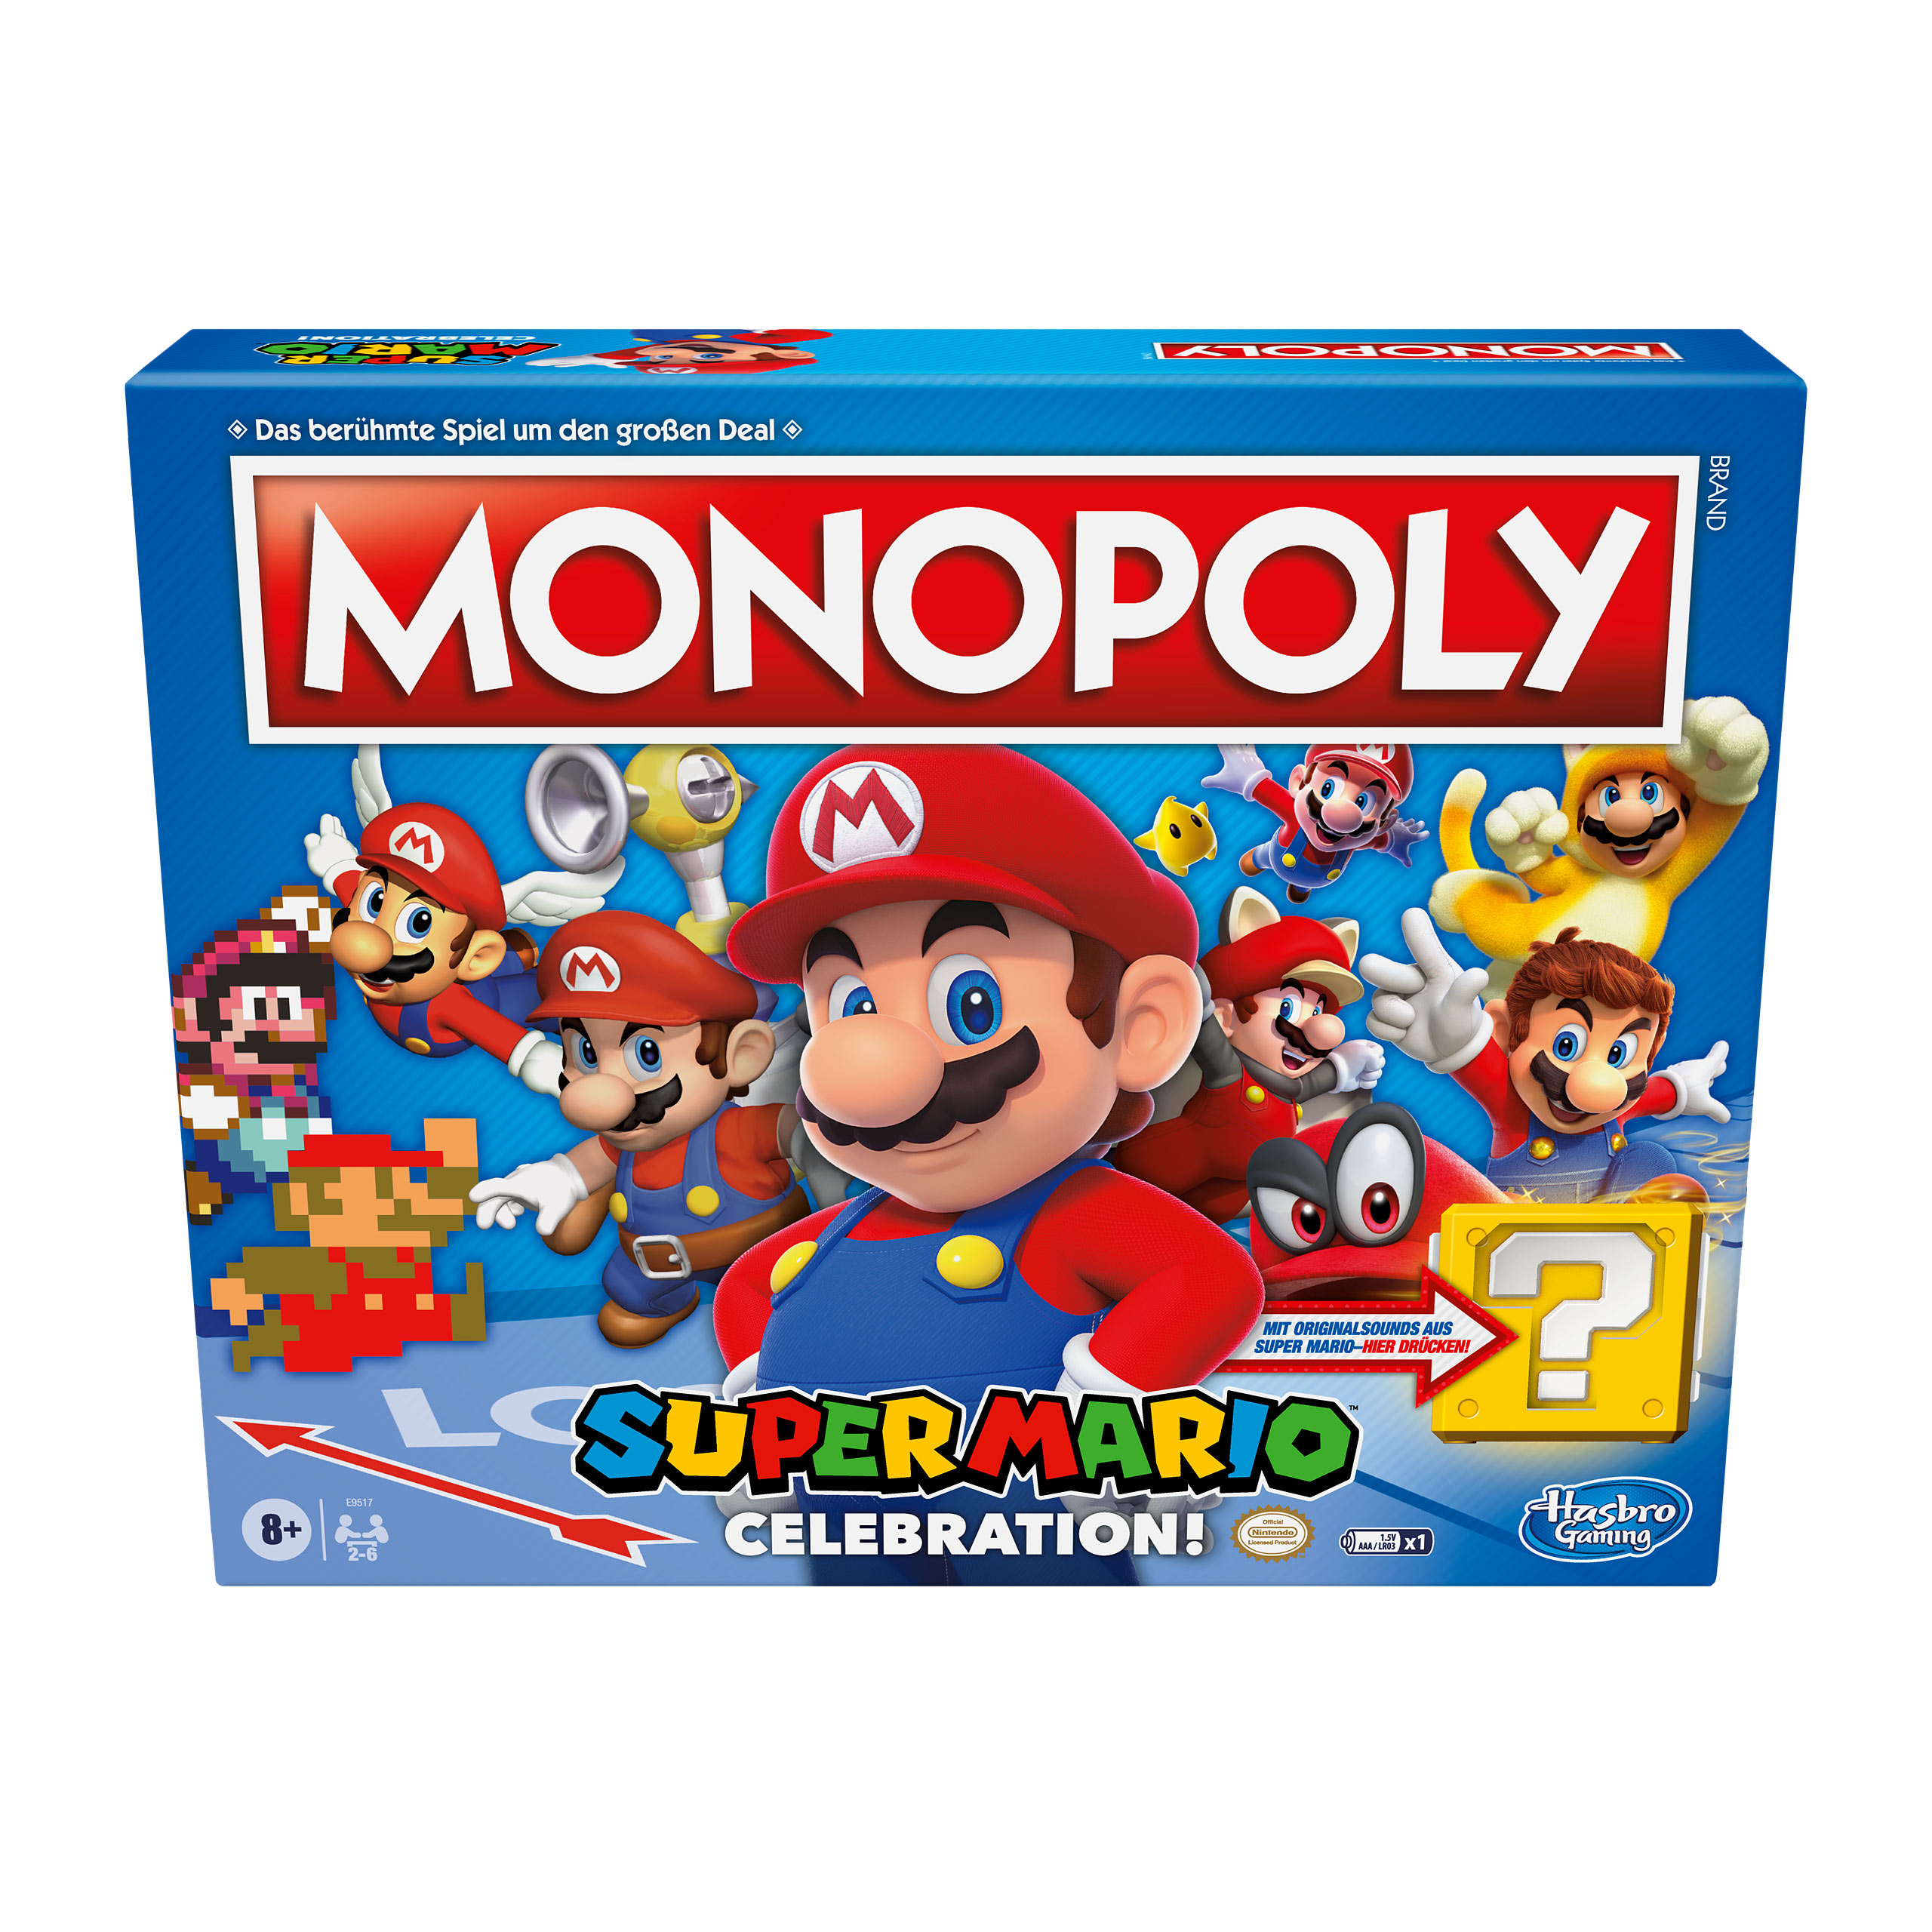 Super Mario - Celebration Monopoly mit Sound